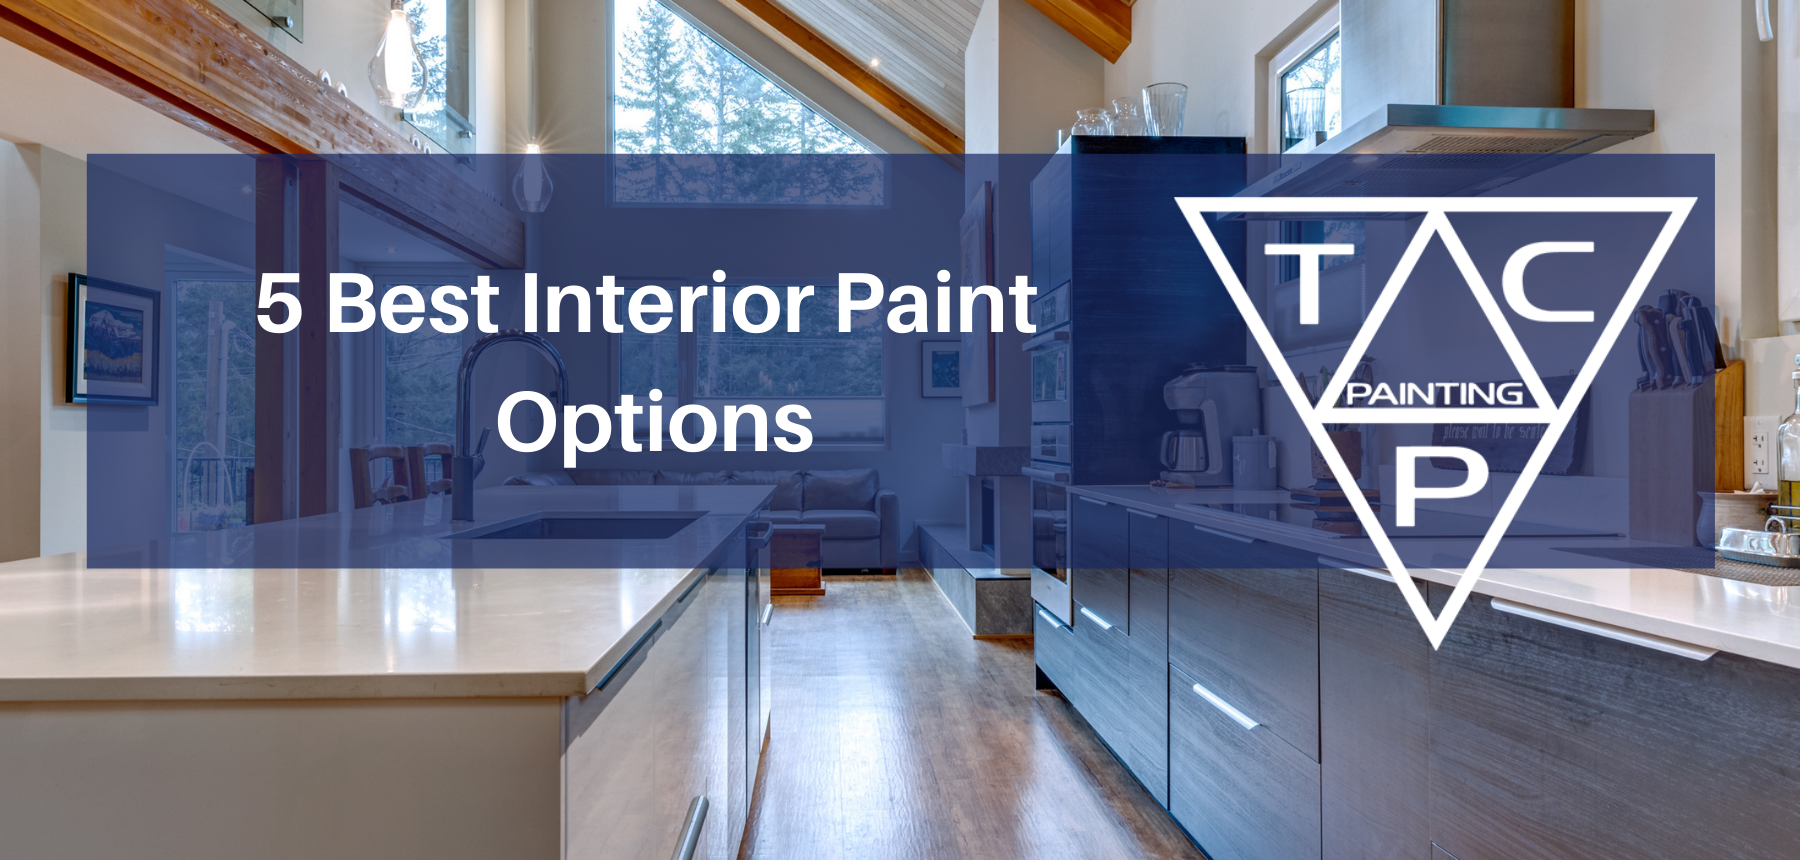 5 Best Interior Paint Options